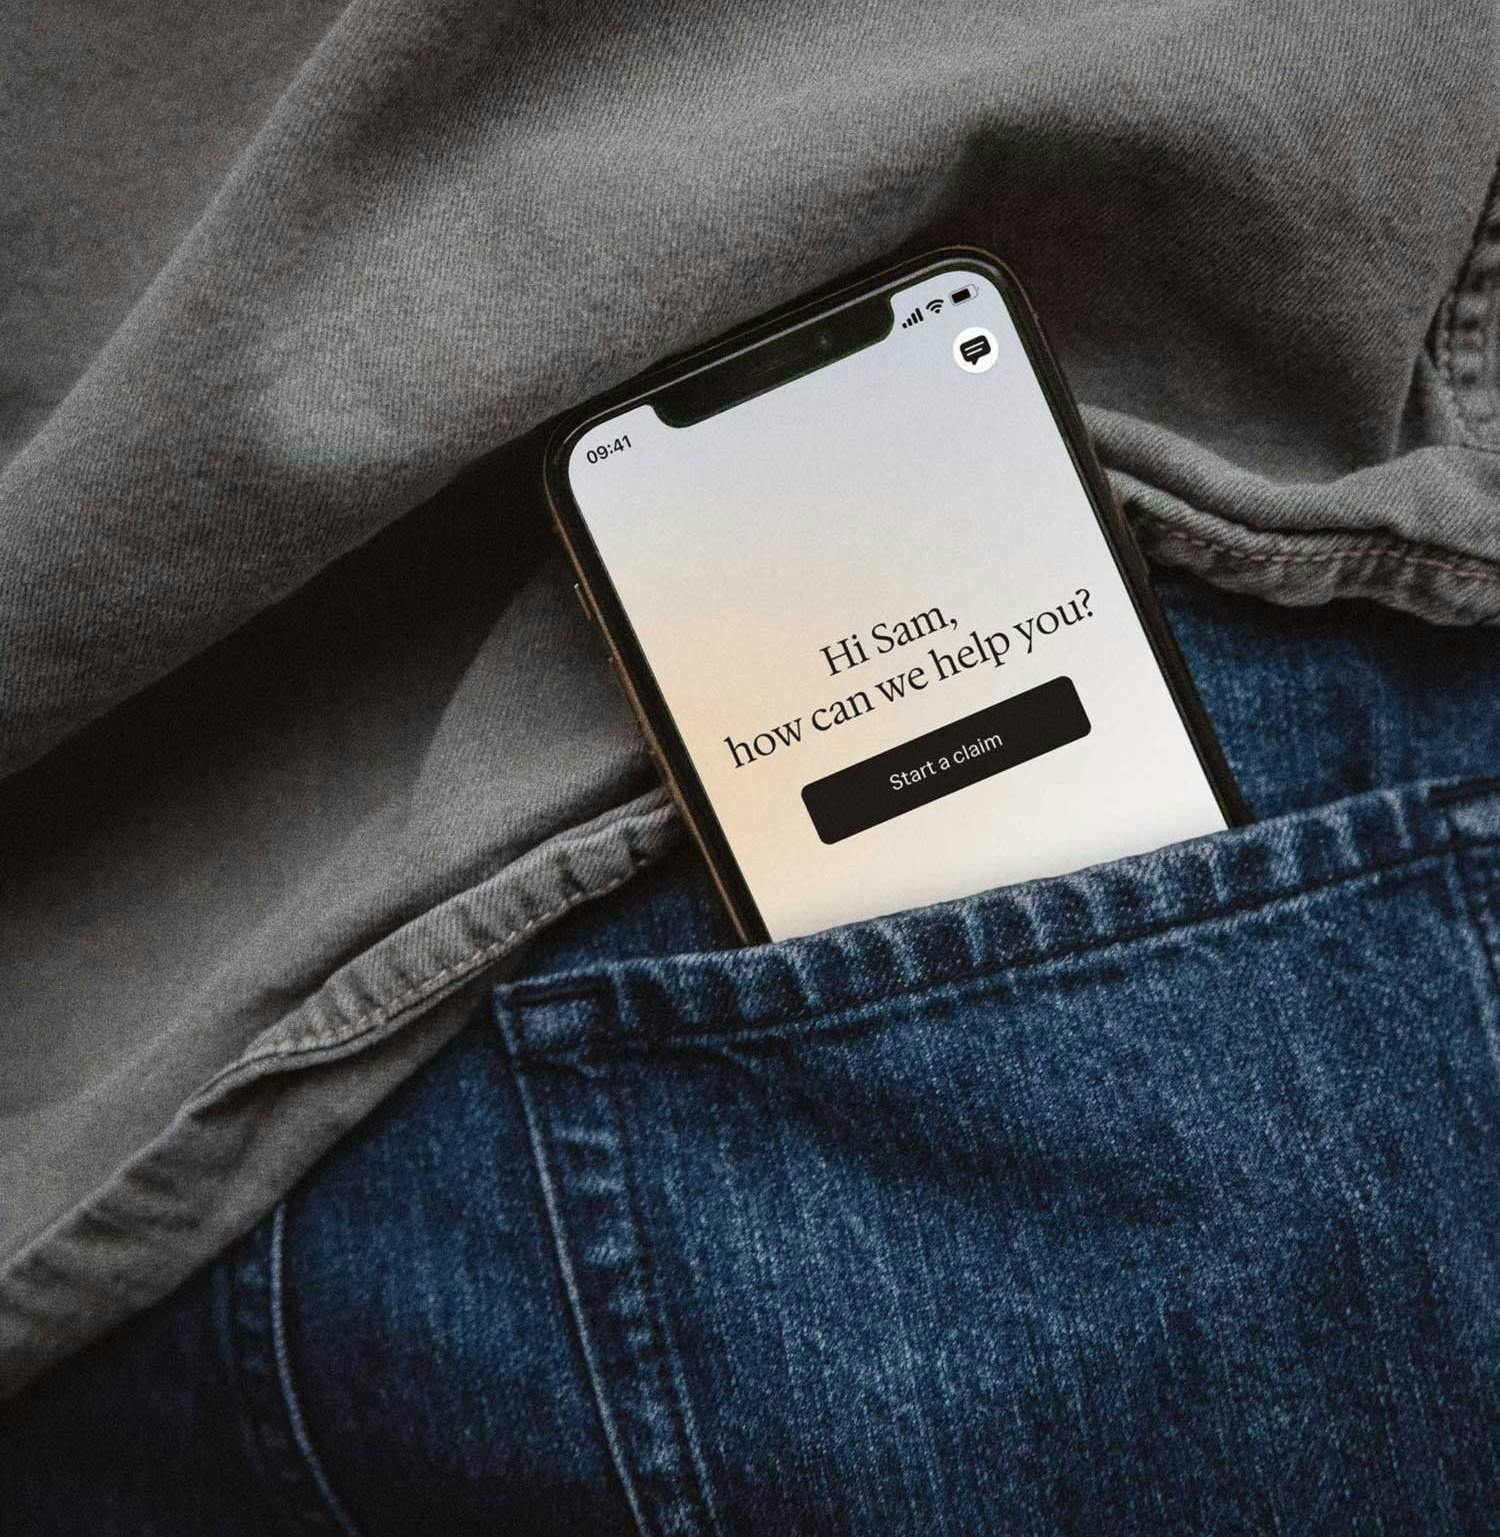 Insurance app in back pocket of jeans.